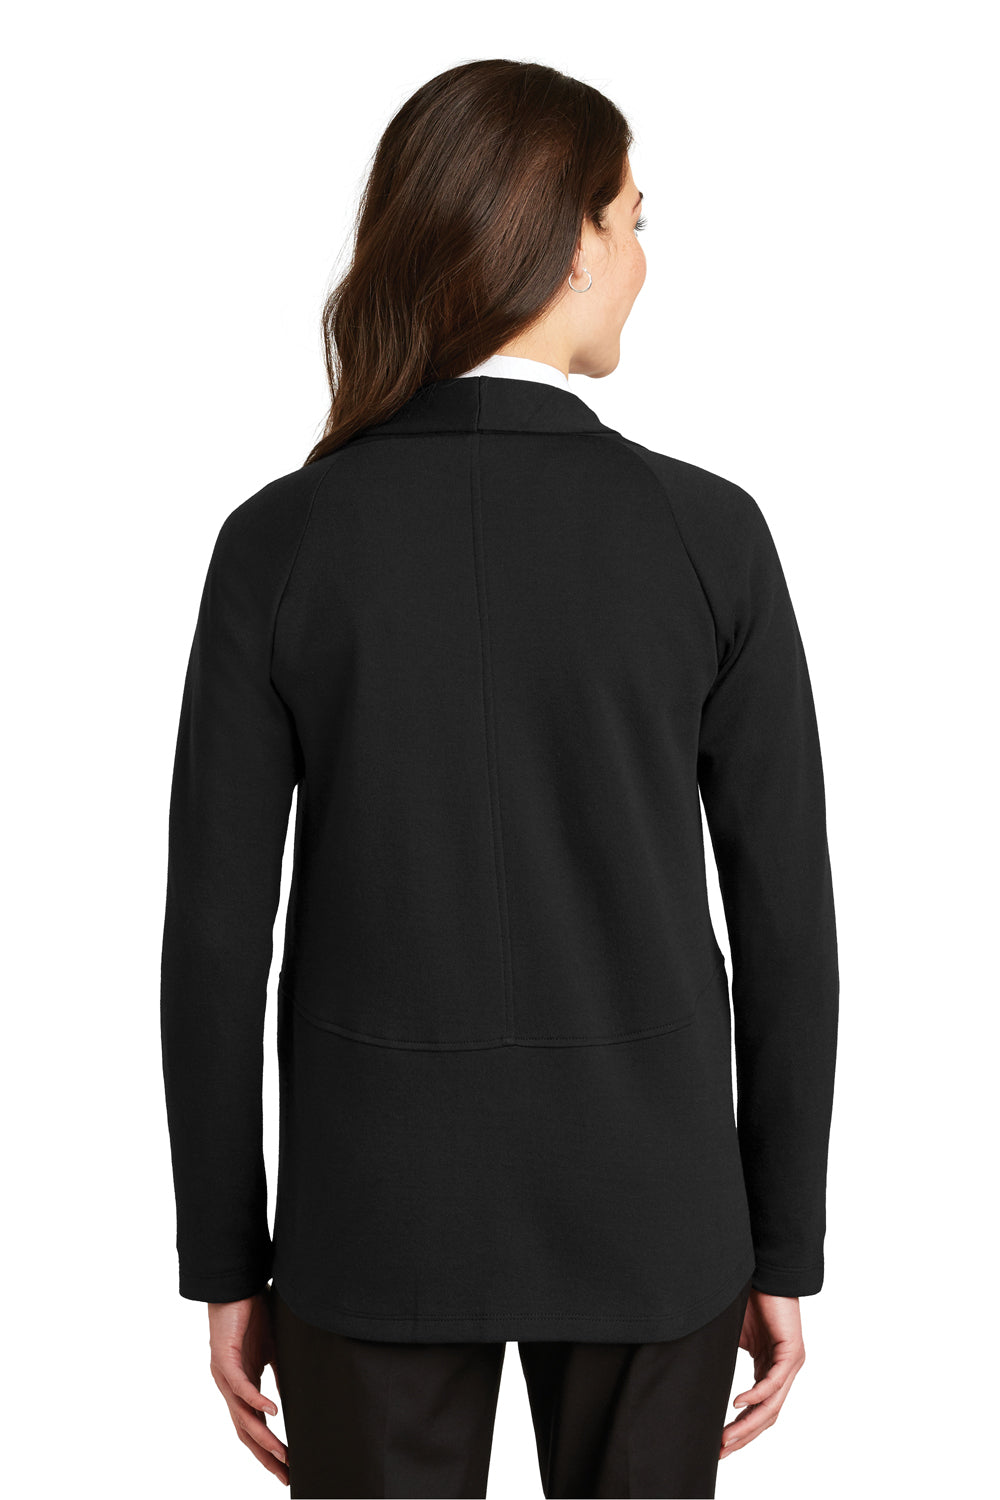 Port Authority L807 Womens Long Sleeve Cardigan Sweater Black Back